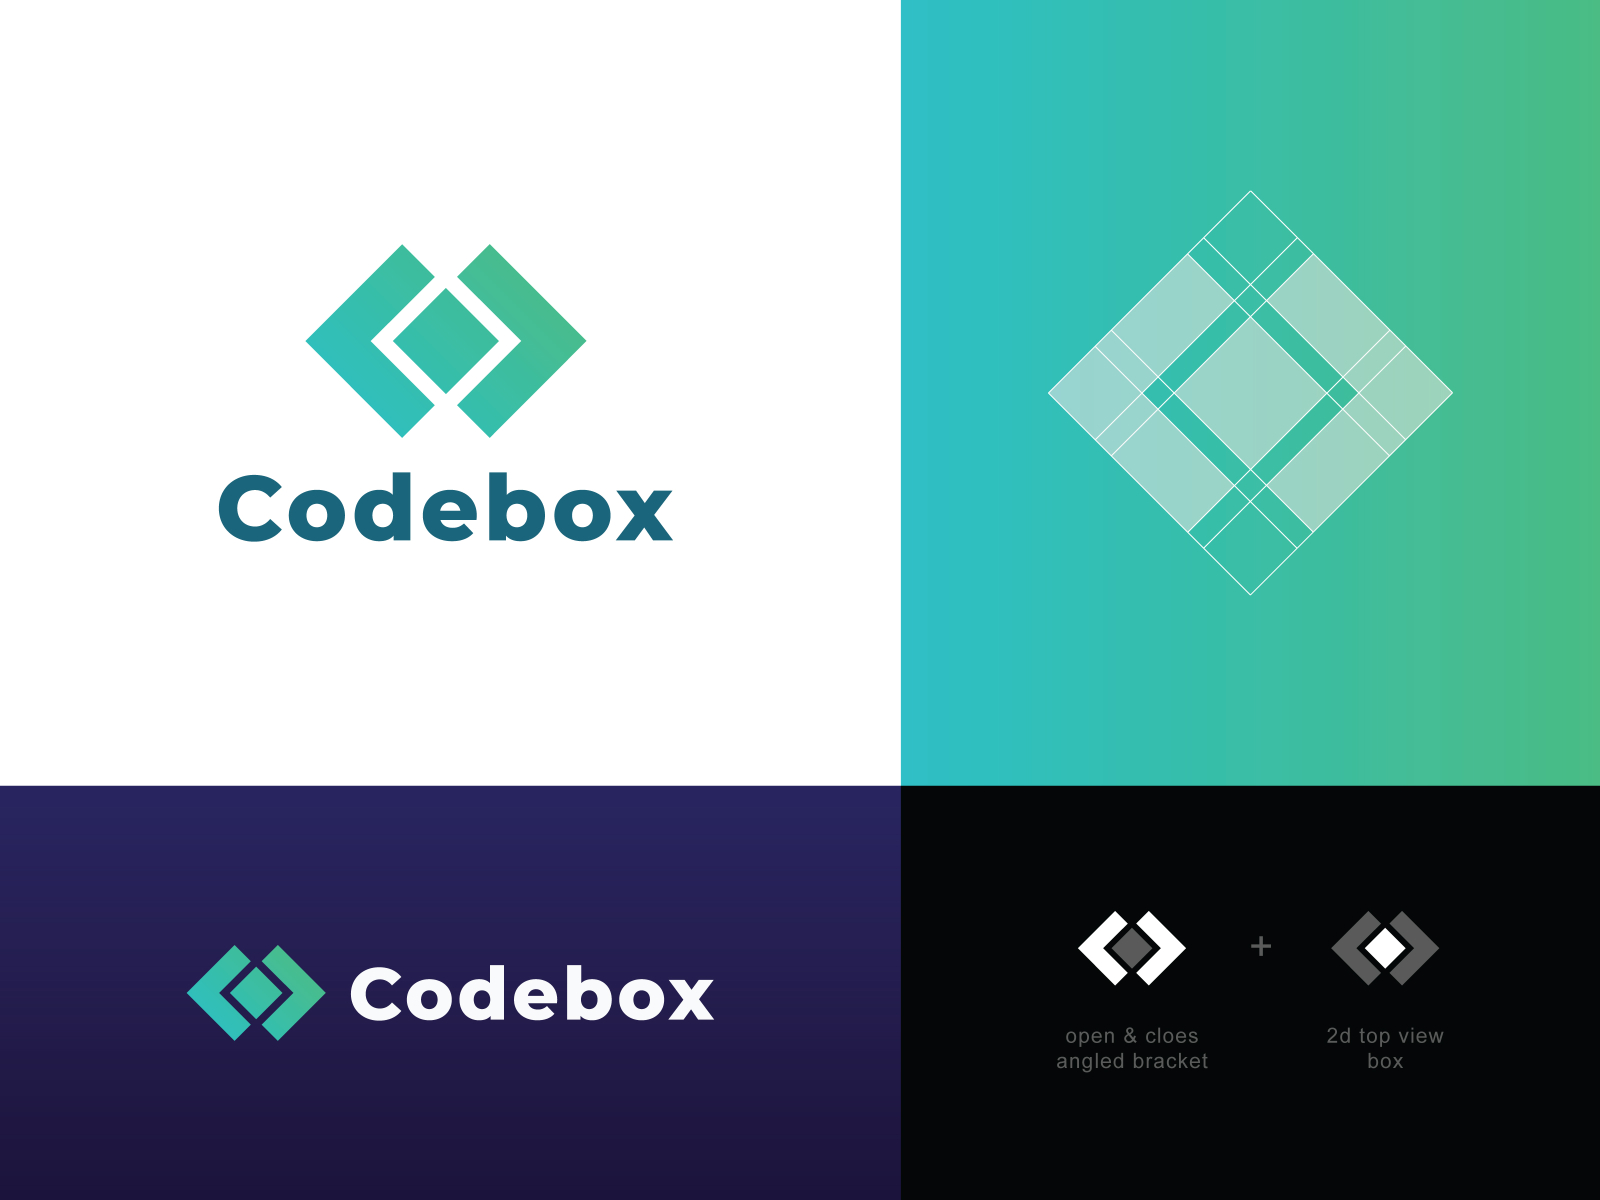 codebox digitalocean